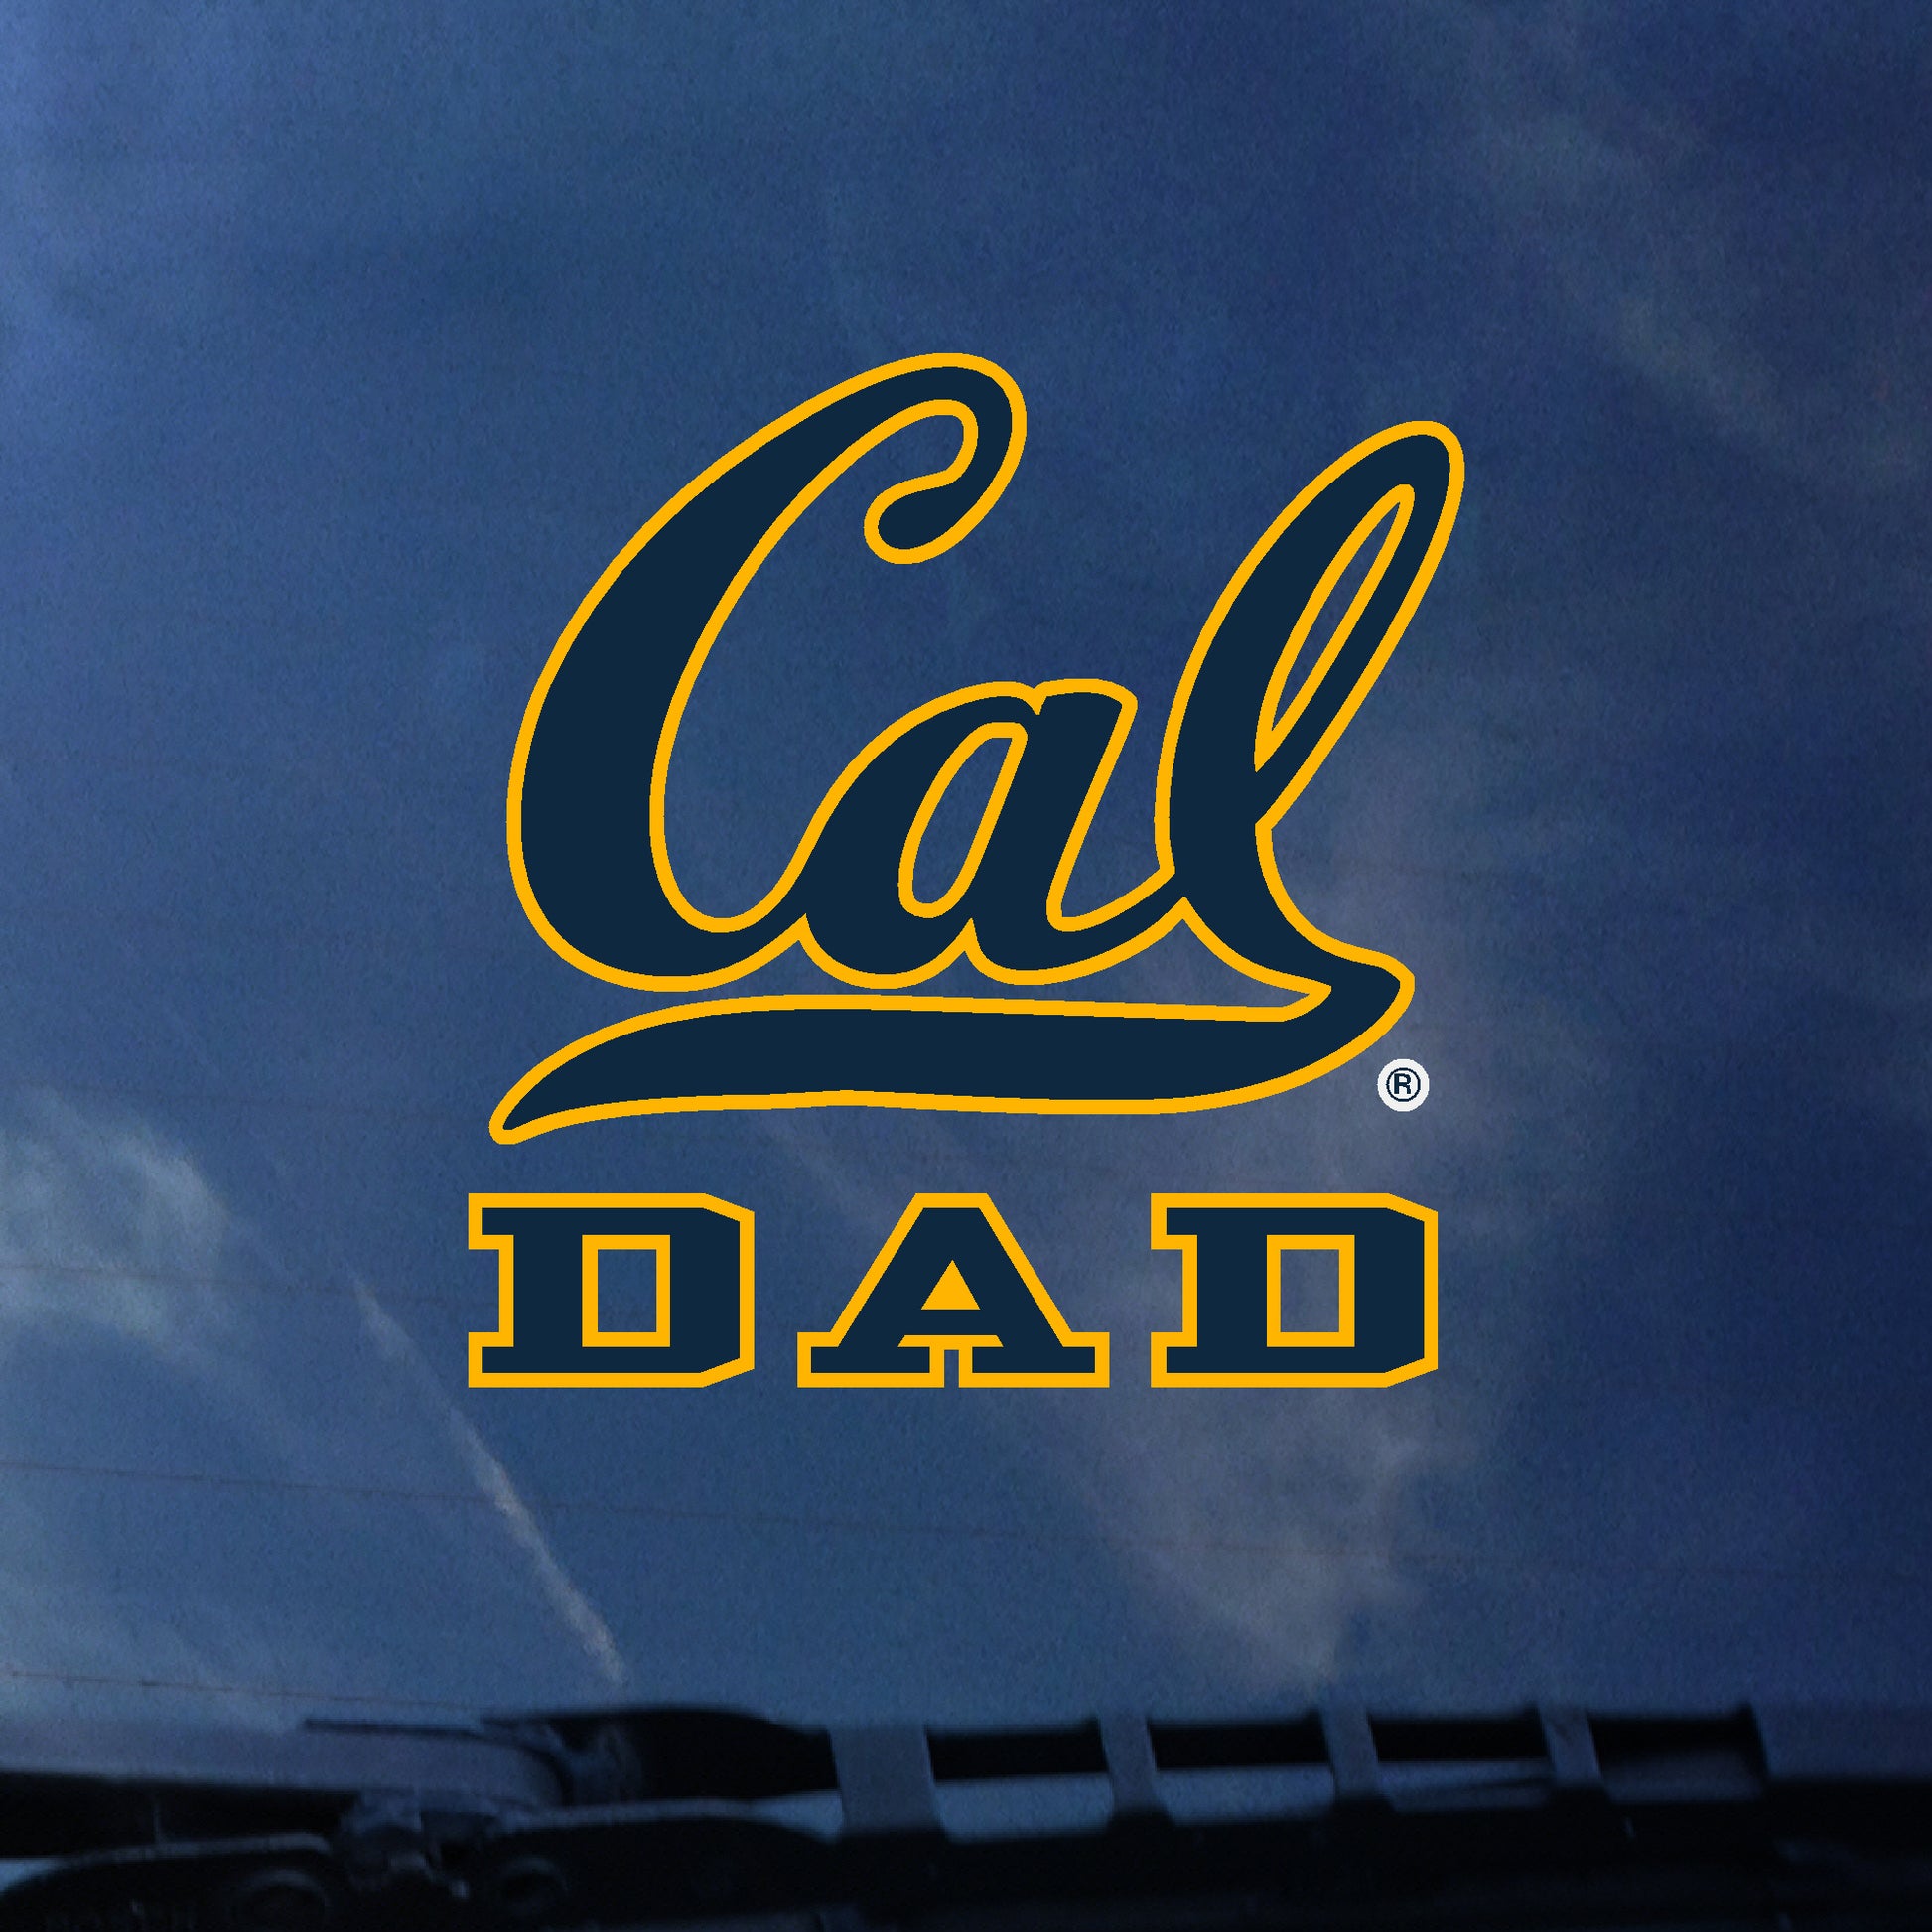 U.C. Berkeley Cal over dad navy Decal sticker-Shop College Wear